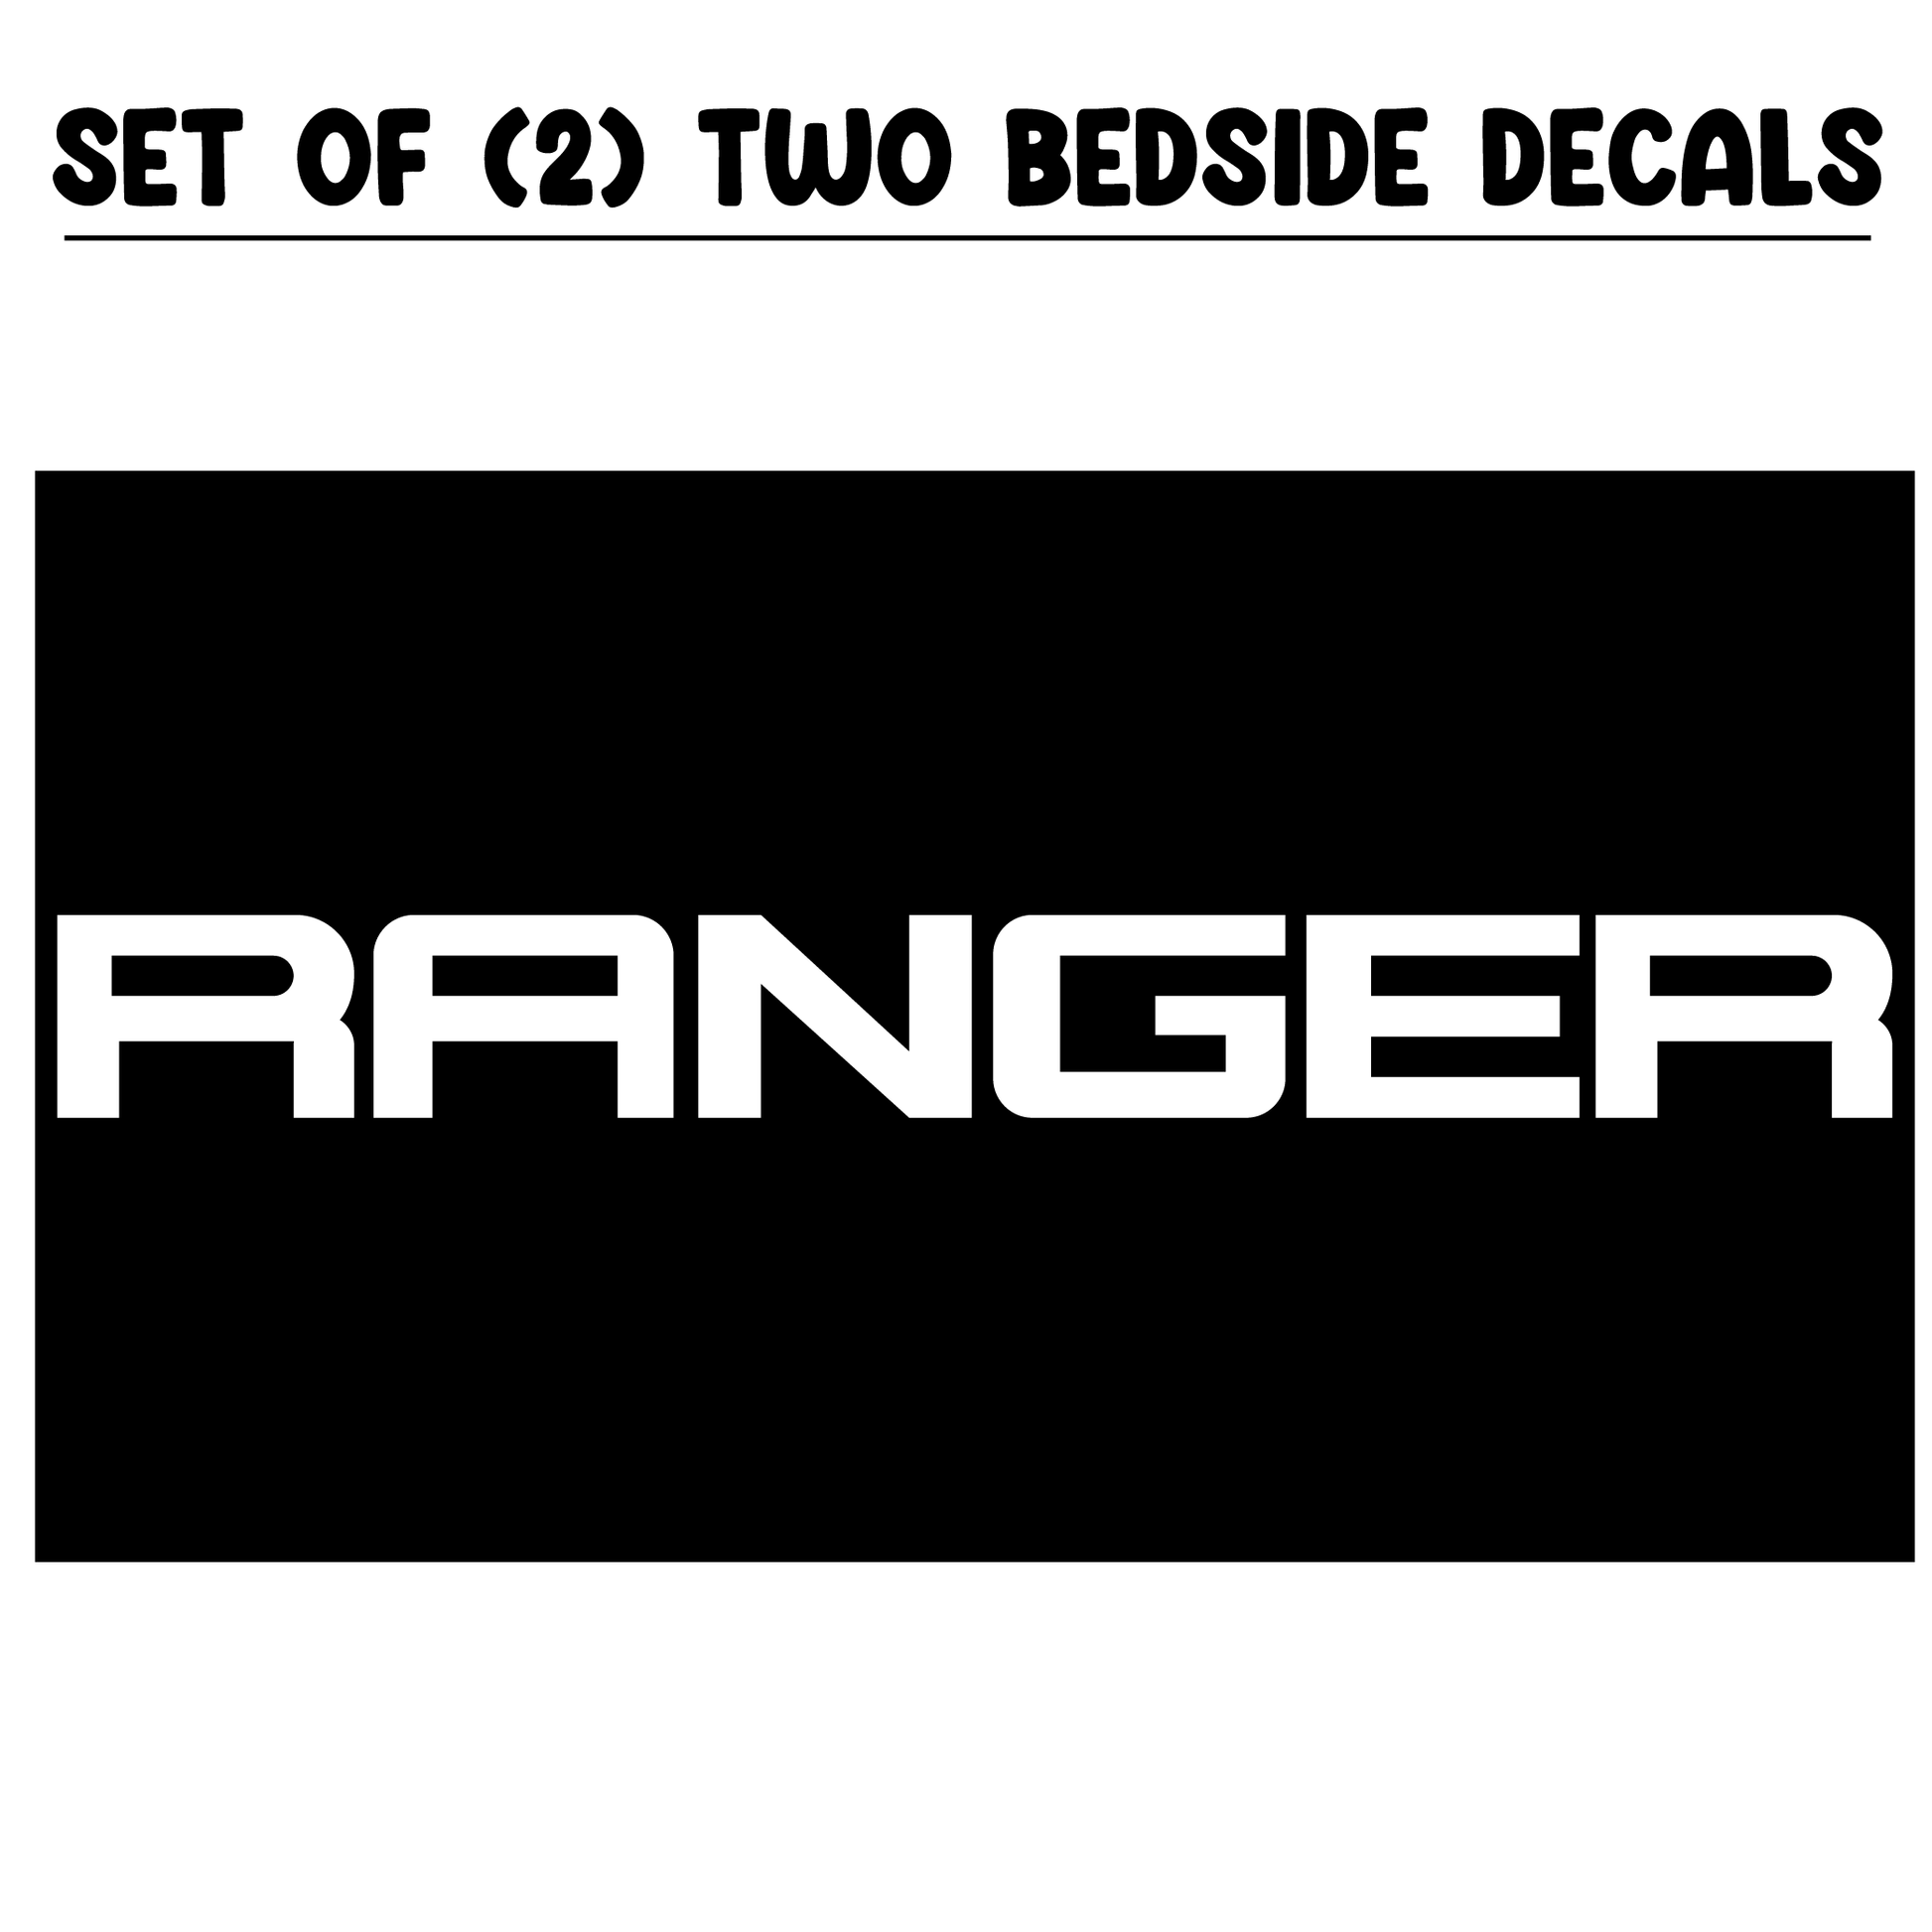 Shop Vinyl Design Ranger Trucks Replacement Bedside Decals #002 Vehicle decal 001 White Gloss Shop Vinyl Design decals stickers